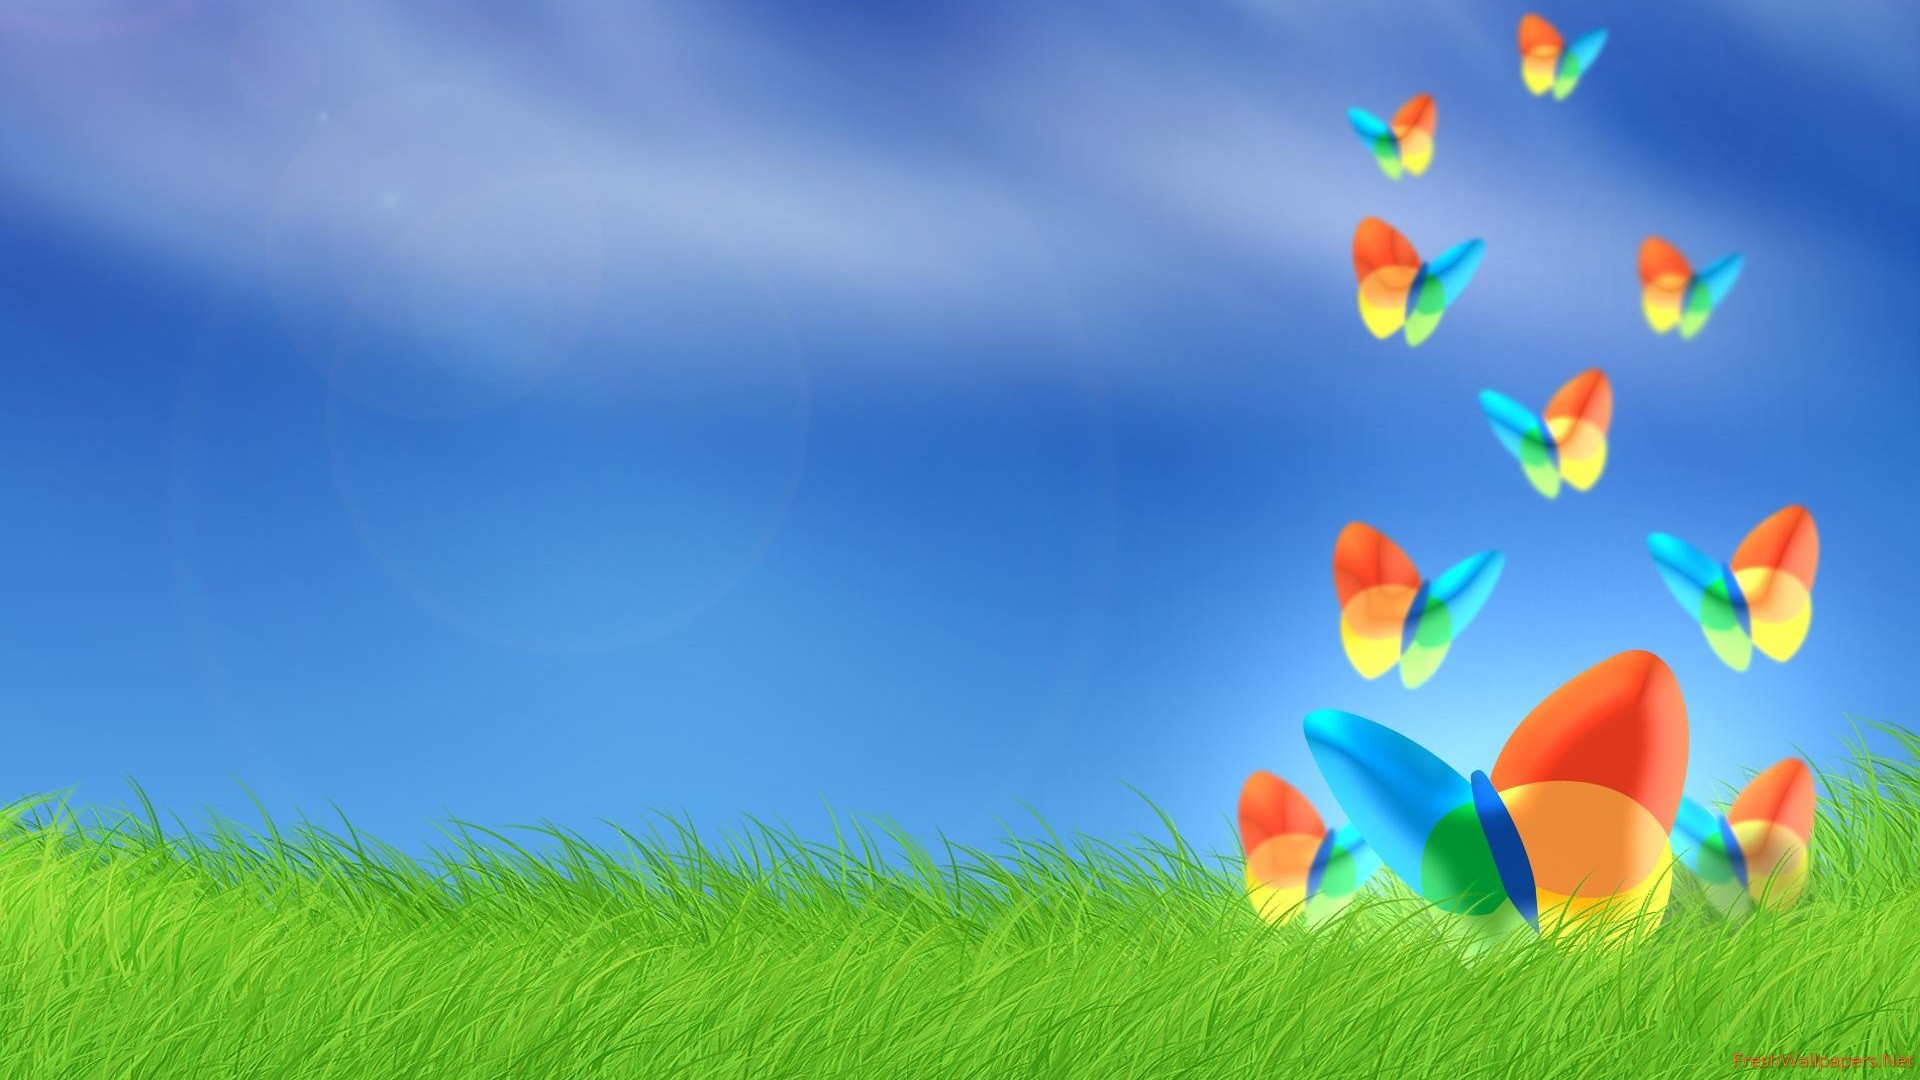 How To Get Animated Background Windows 10 Free - Donald Larmon blog